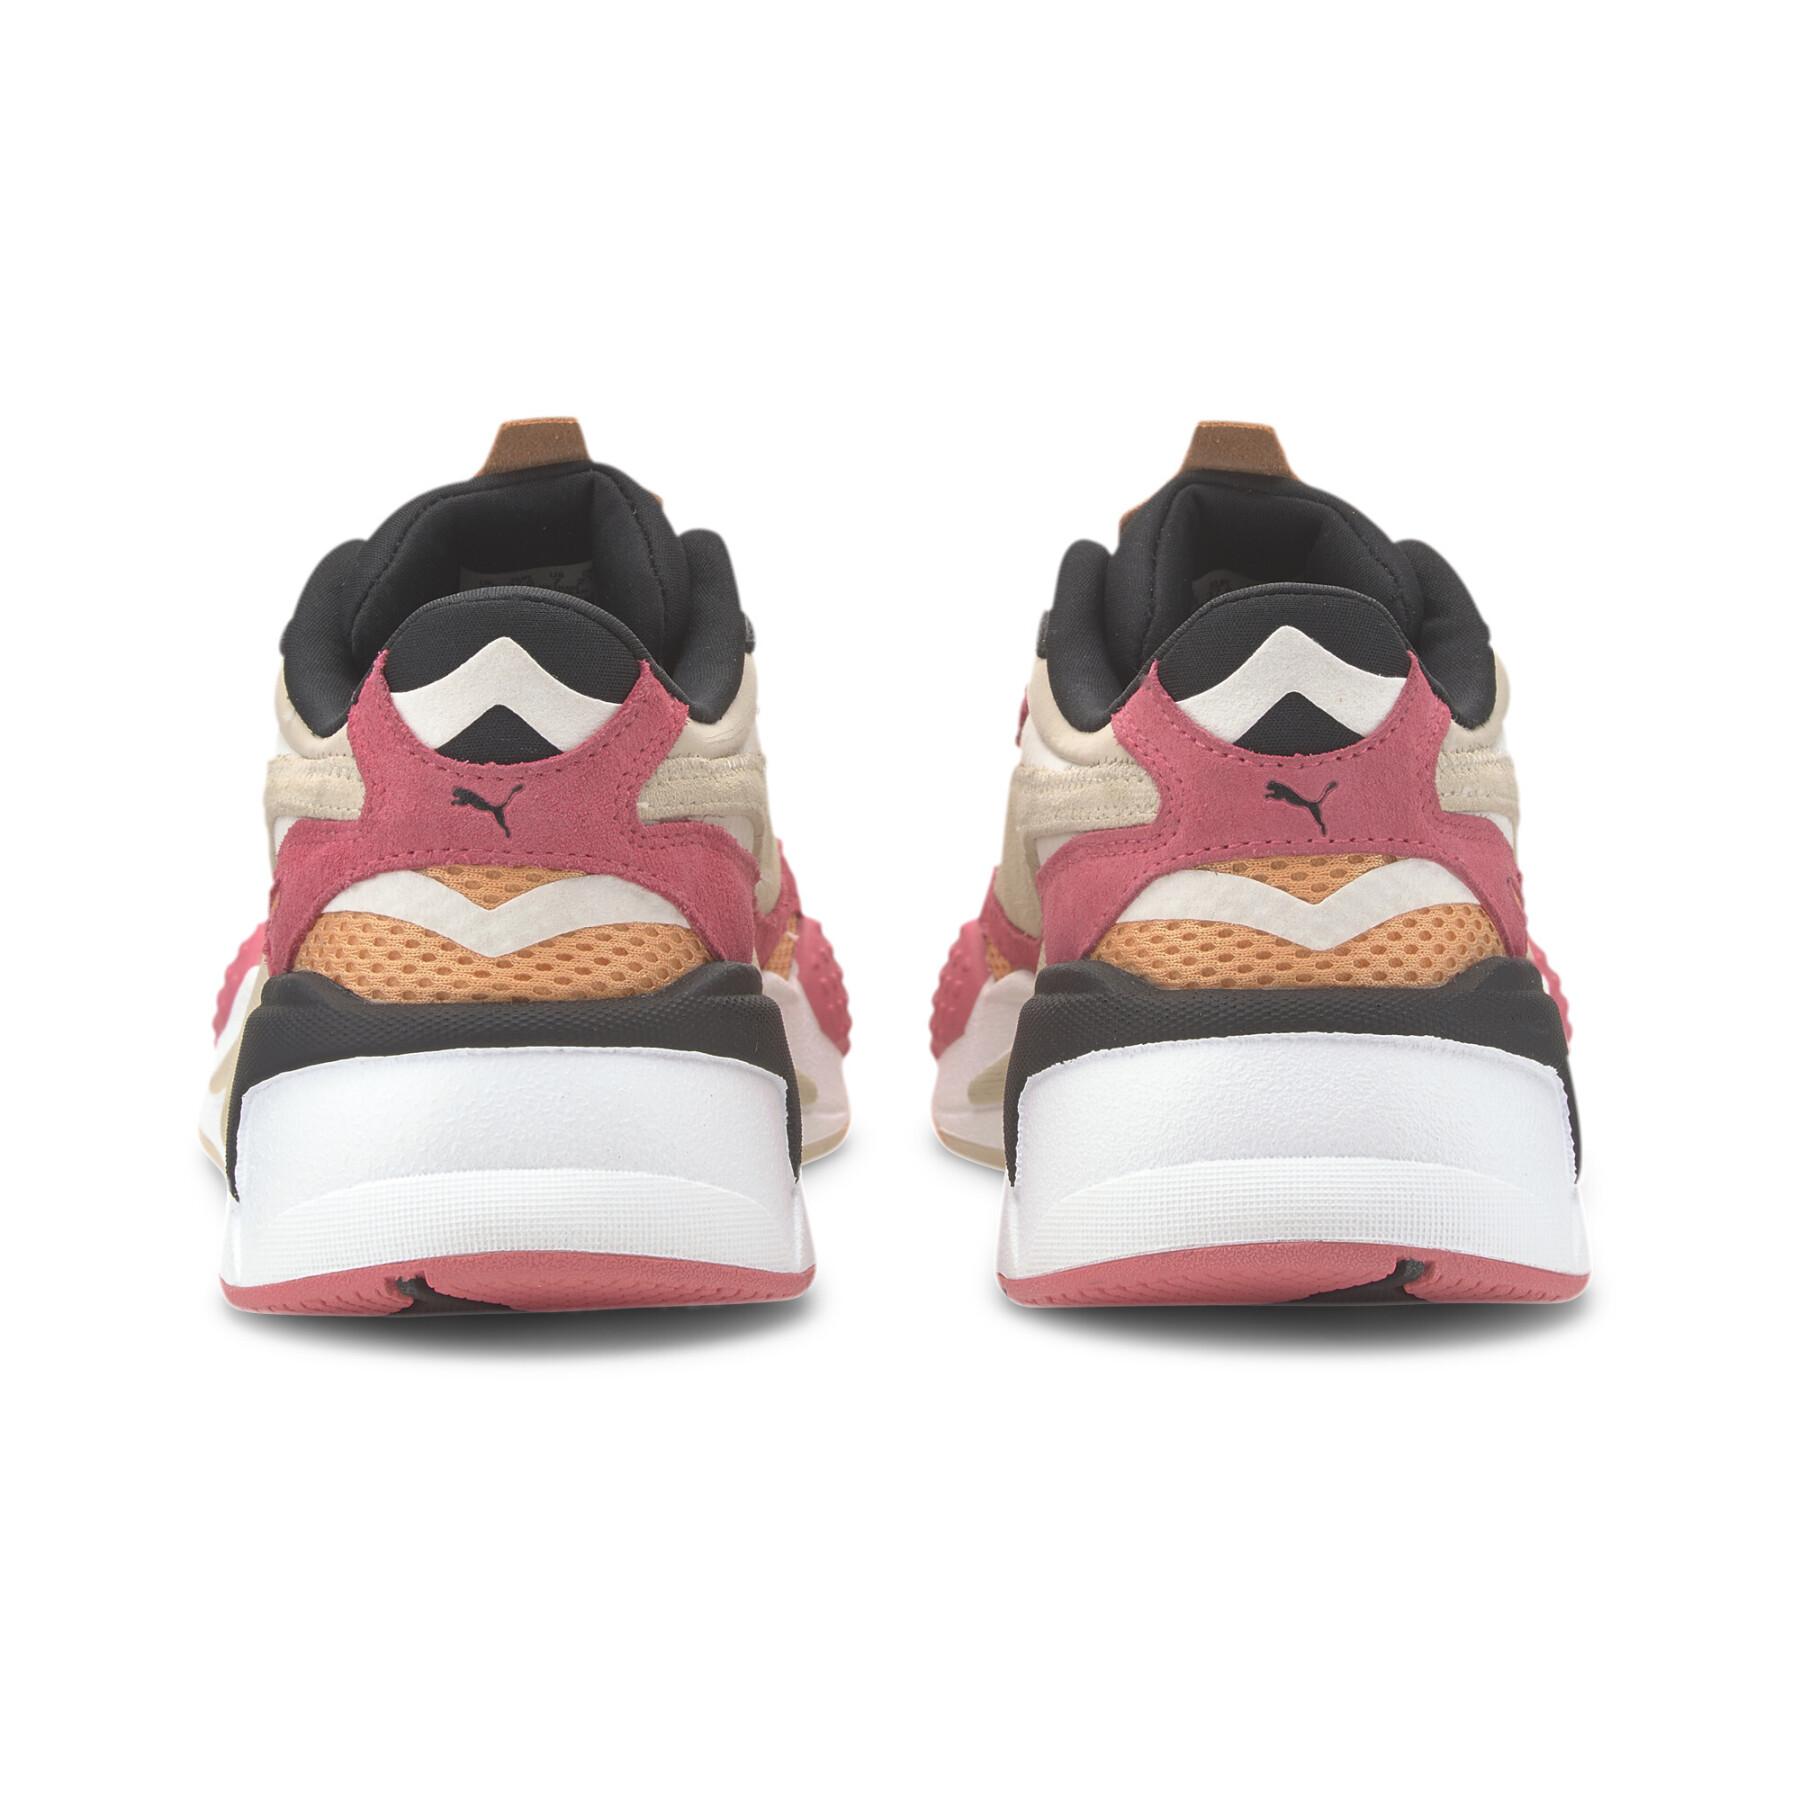 Women's sneakers Puma Rs-X³ mesh pop